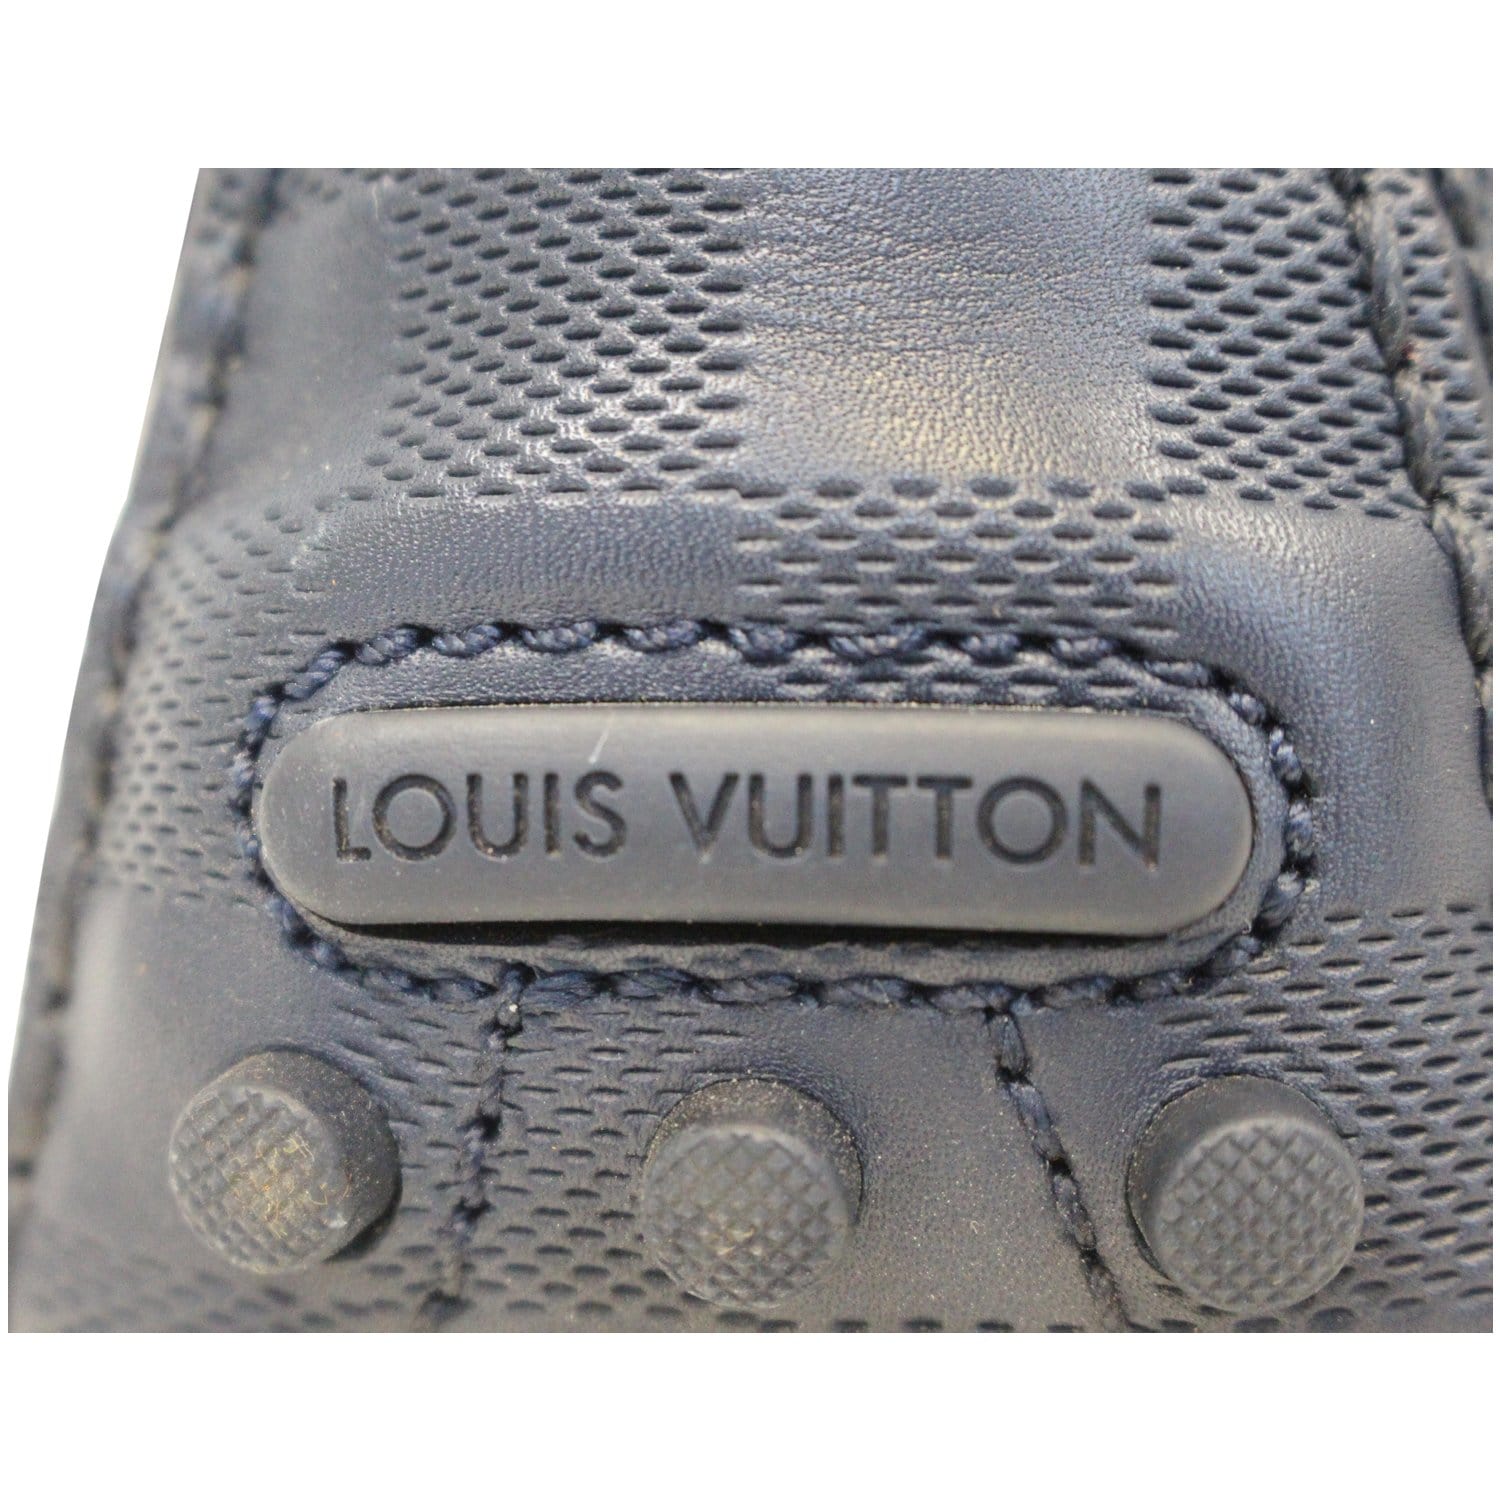 Louis Vuitton hockenheim moccasin shoes – All Travel Essentials